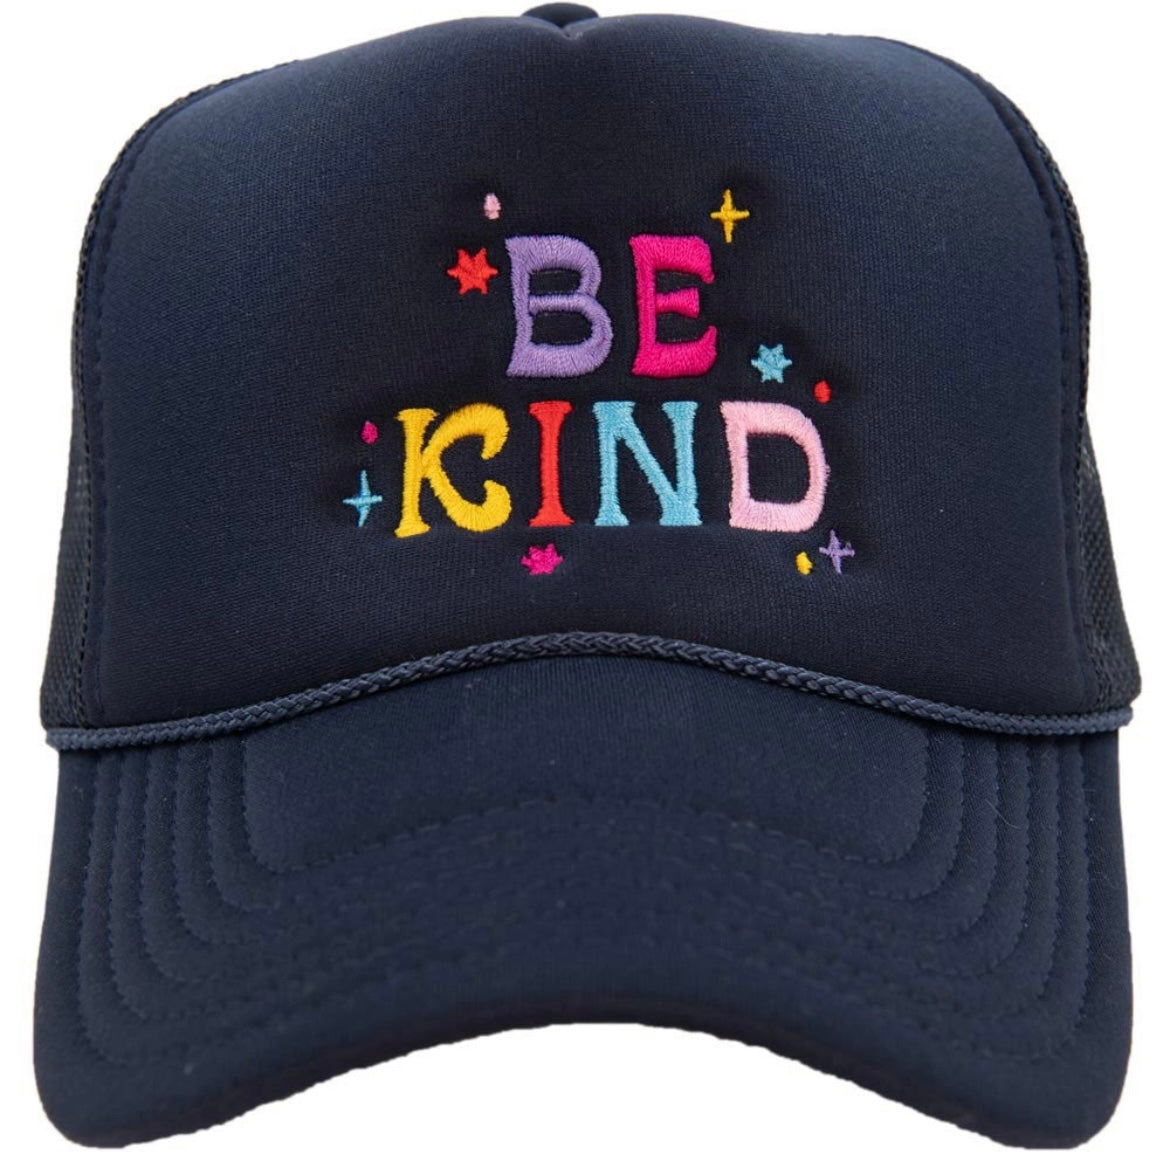 Be Kind Trucker Hat - Navy